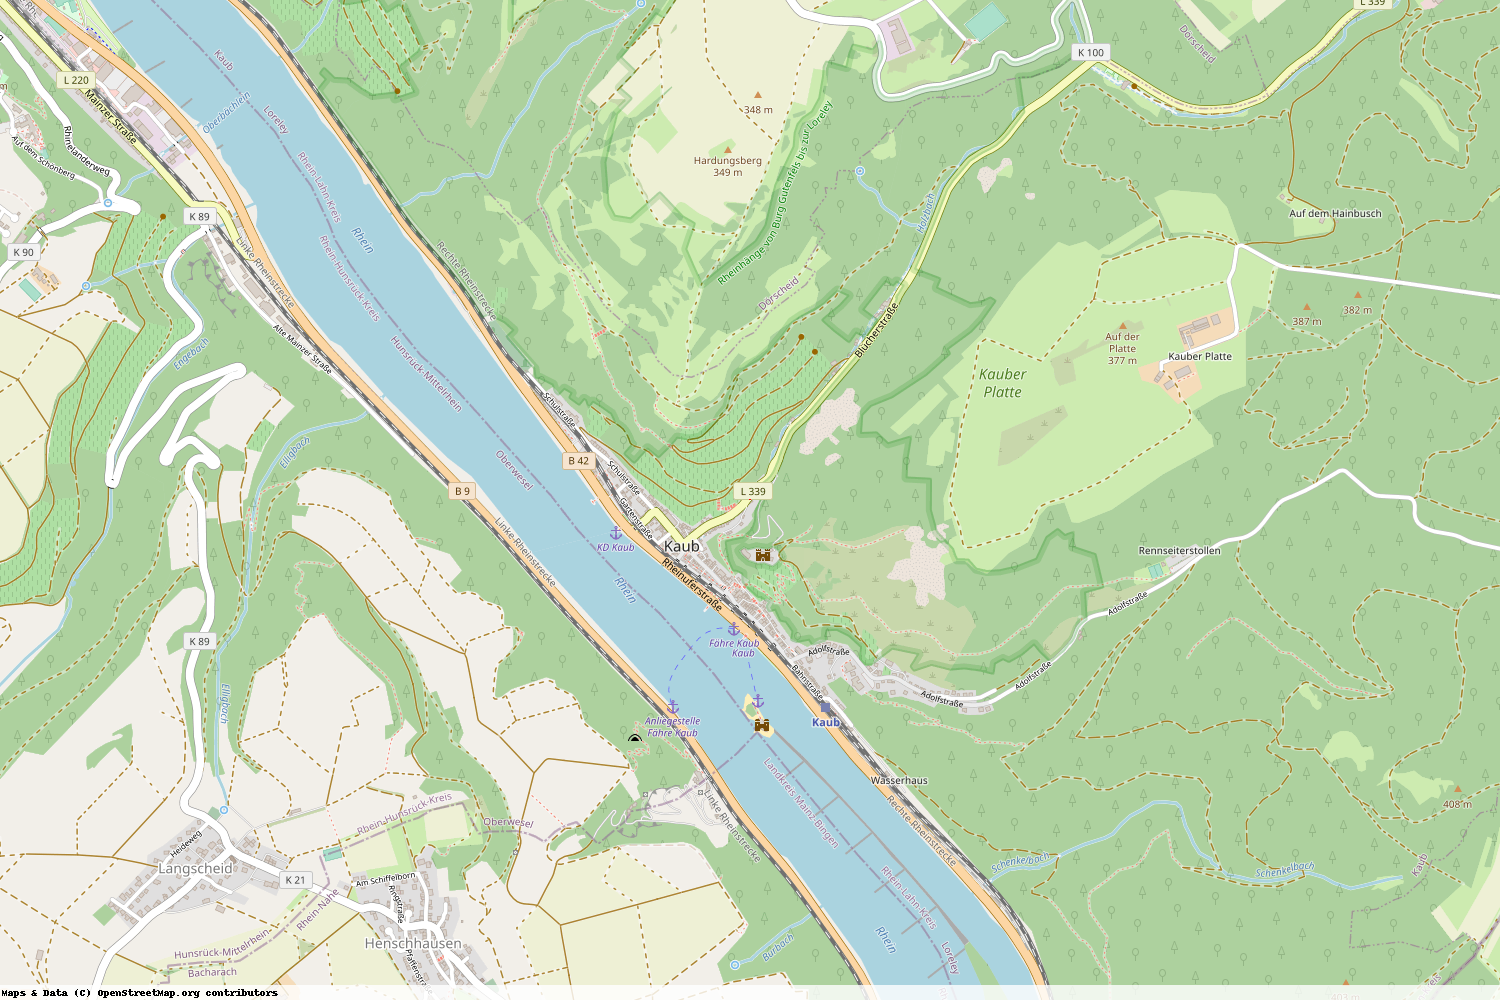 Ist gerade Stromausfall in Rheinland-Pfalz - Rhein-Lahn-Kreis - Kaub?